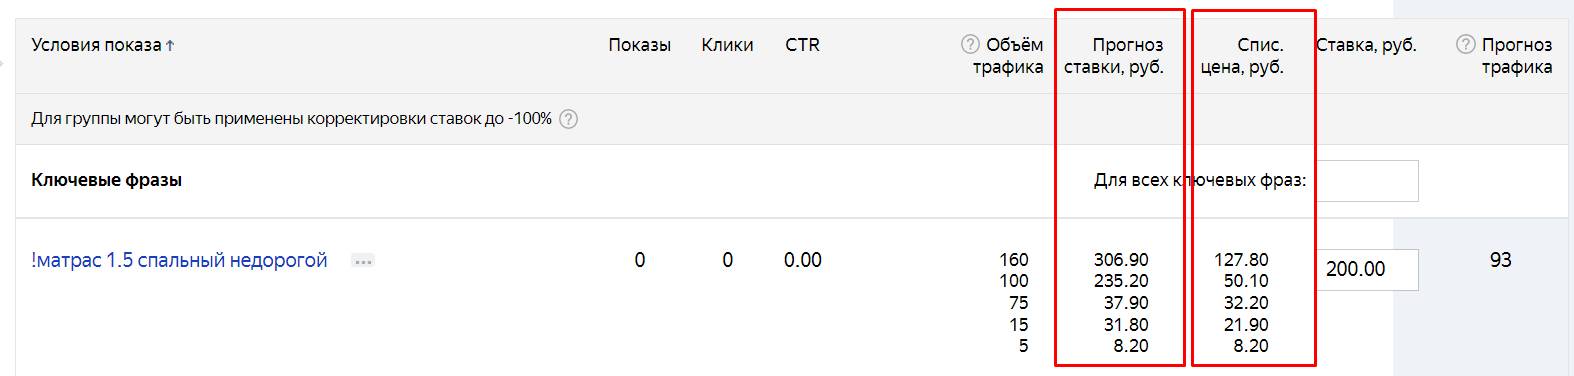 Прогноз ставки и списываемая цена в Яндекс Директ